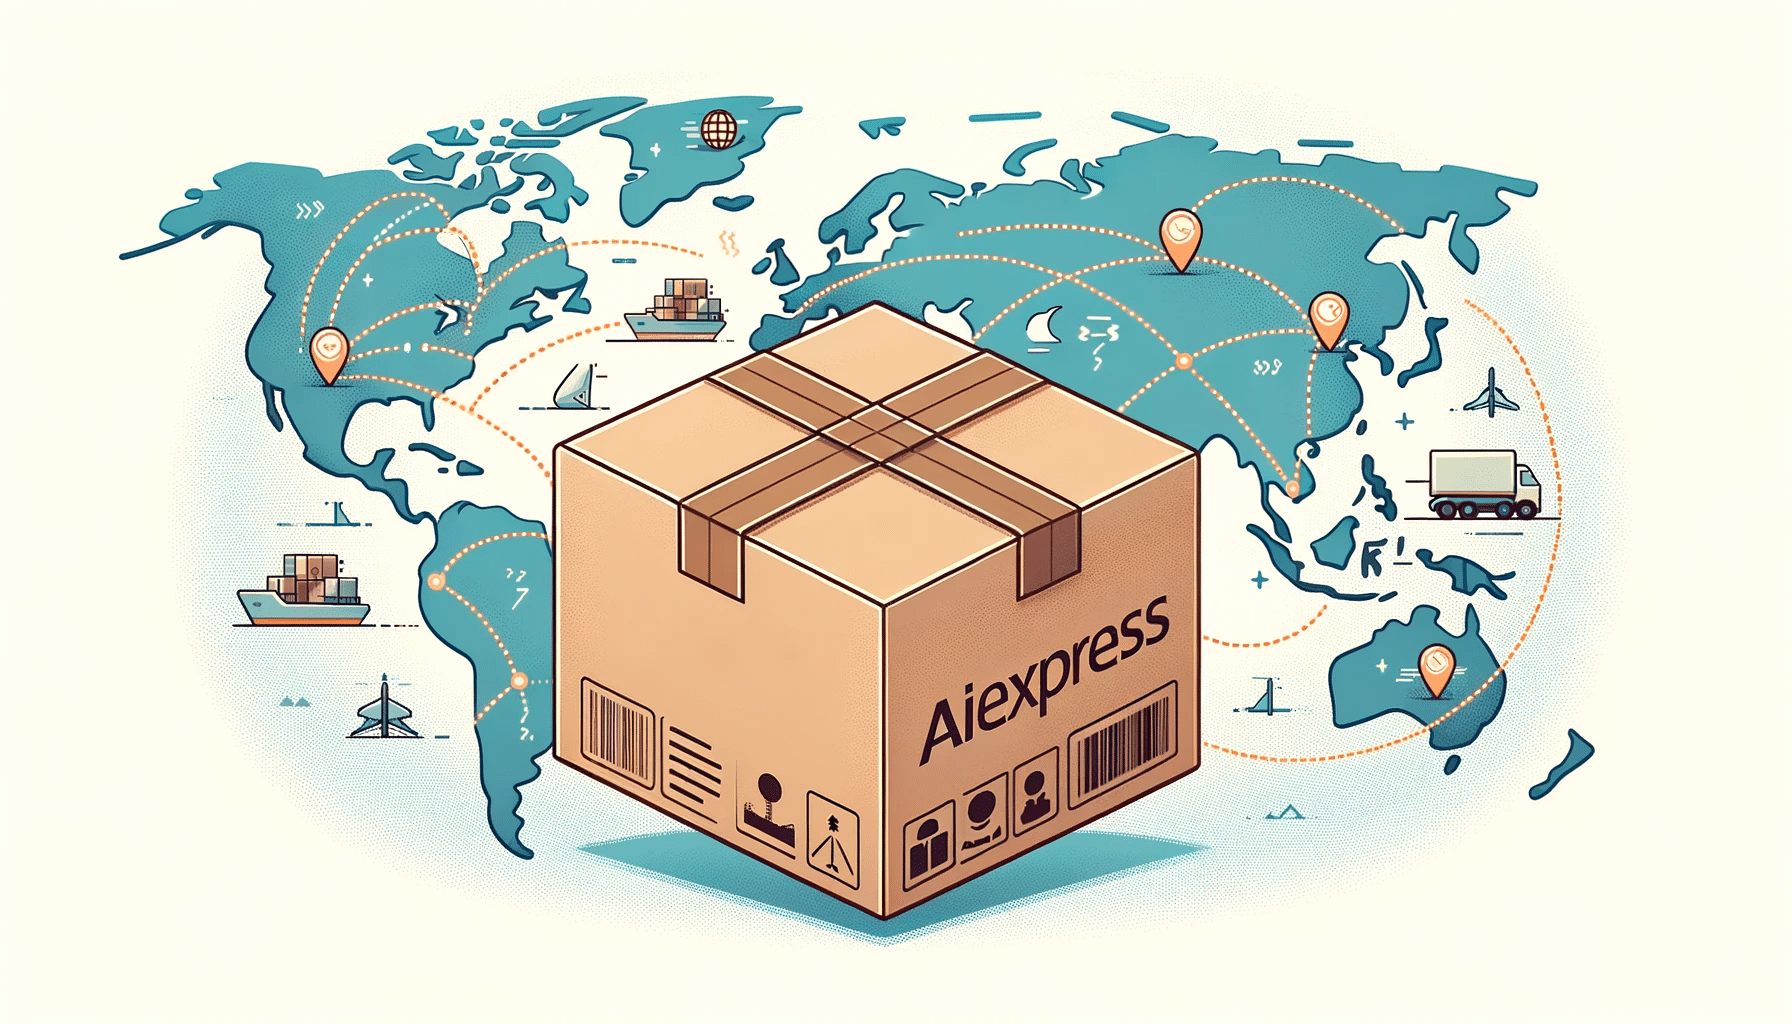 Quanto tempo demora a entrega do AliExpress?